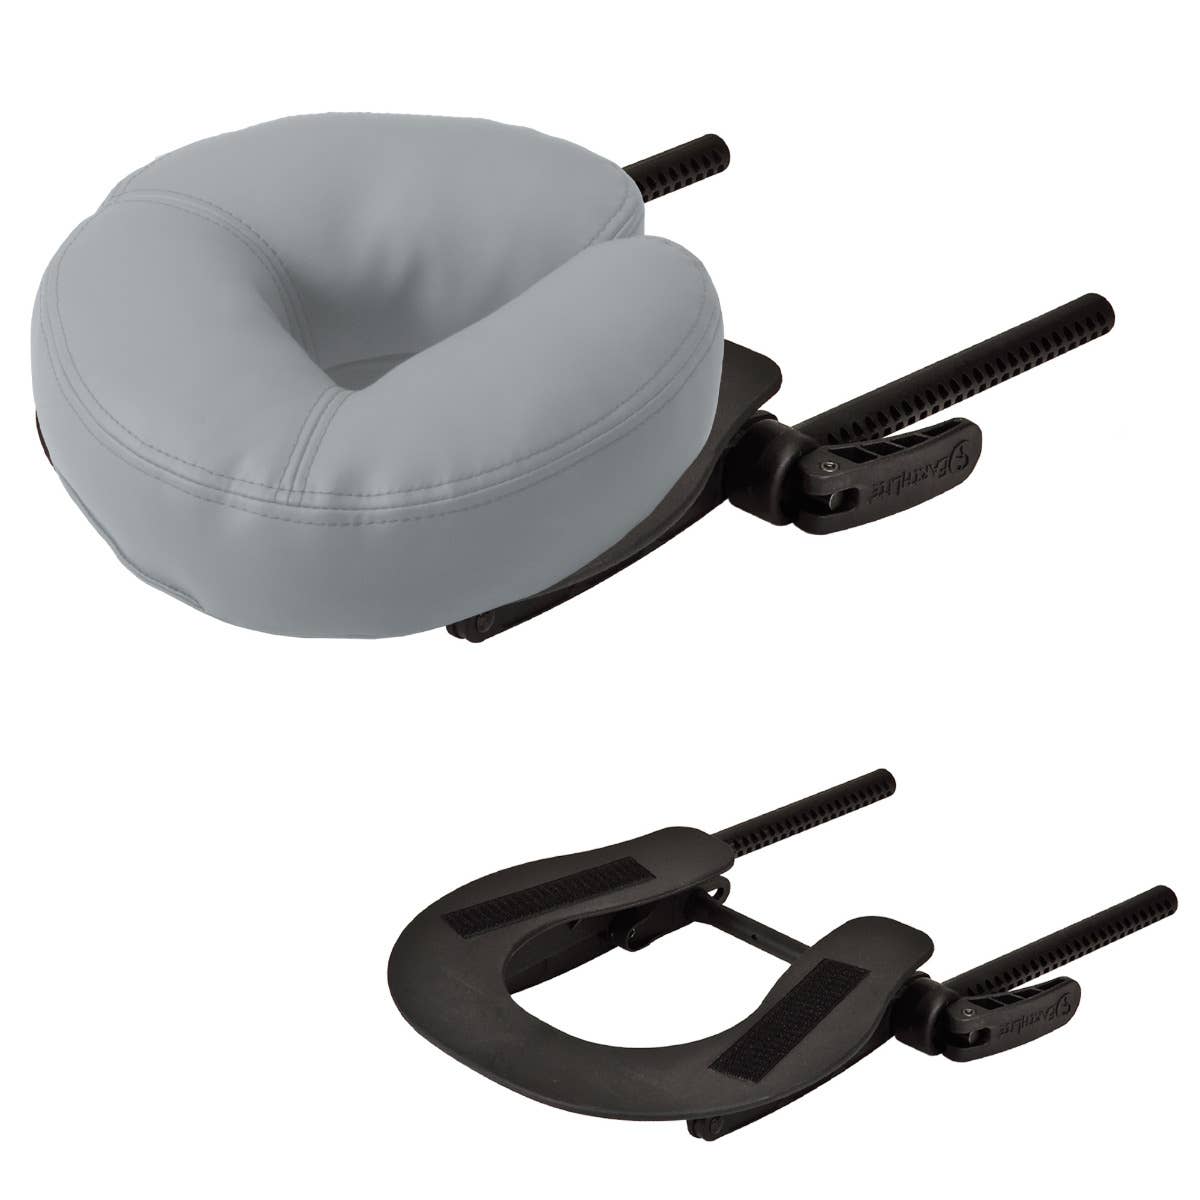 Earthlite Deluxe Adjustable Headrest - Platform and Cushion (Sterling)